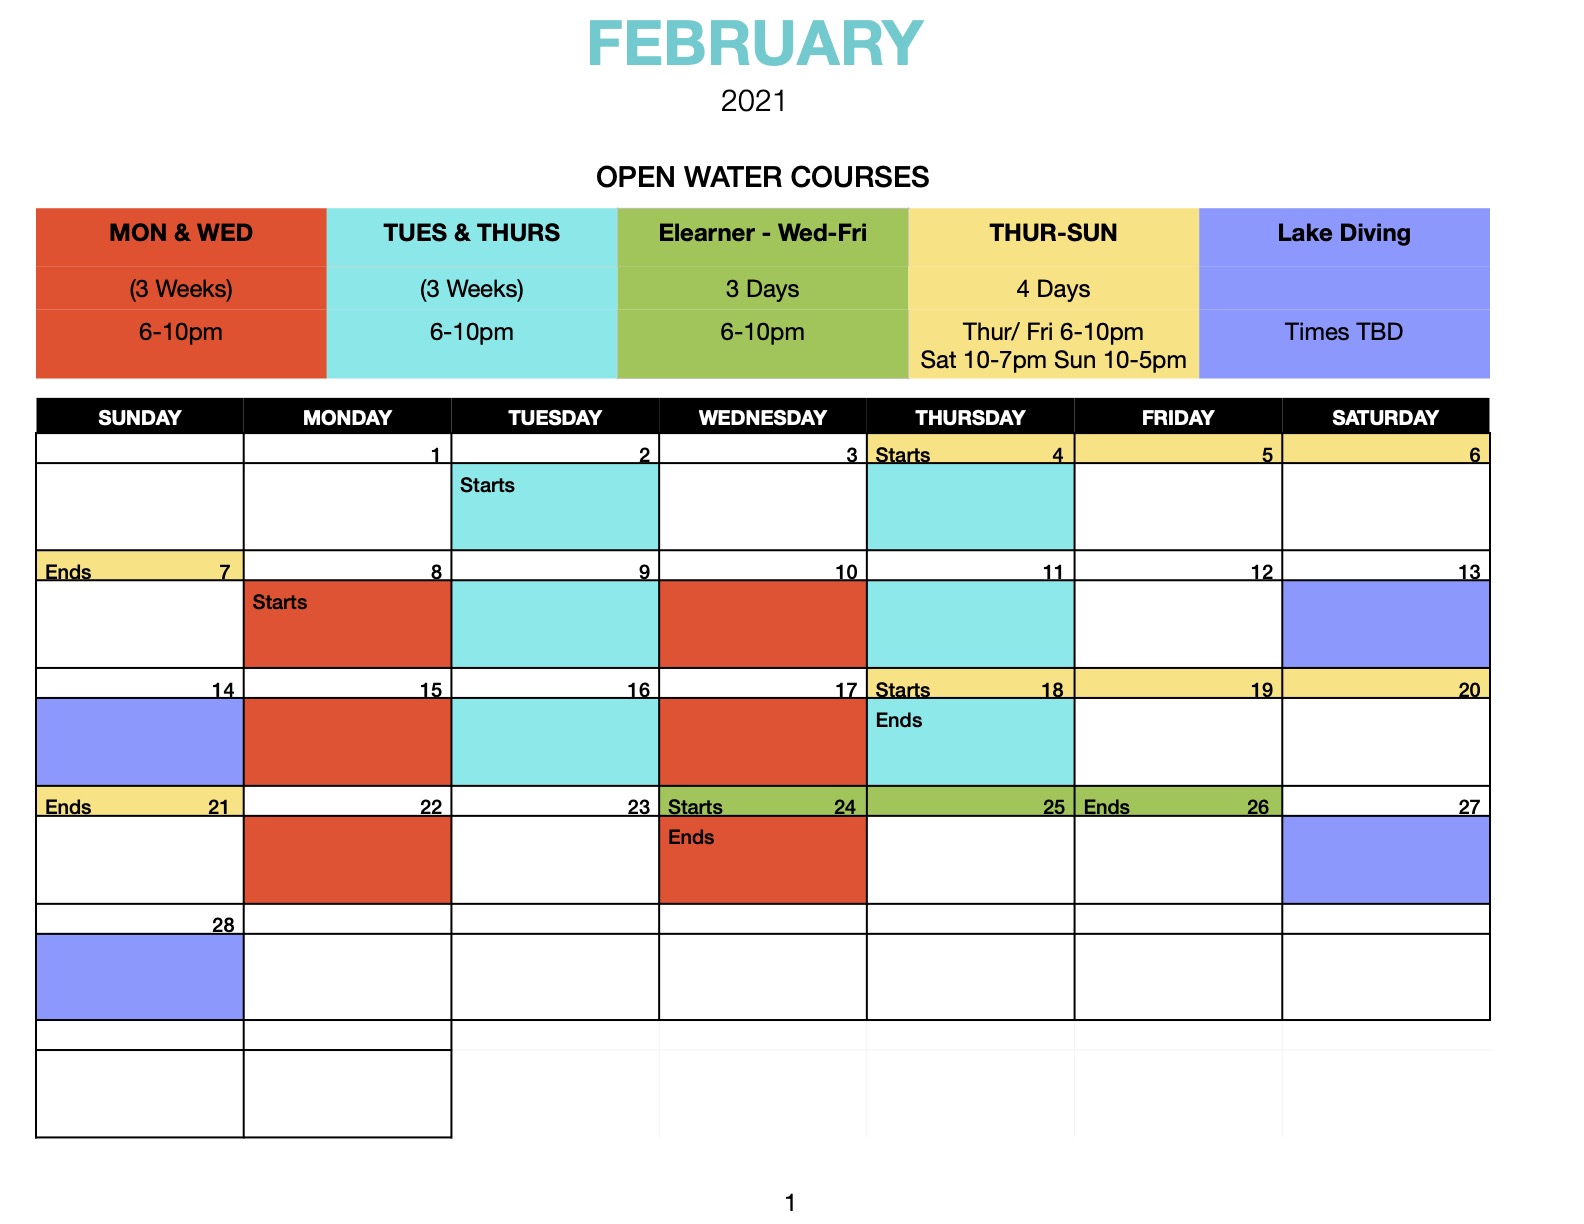 Open Water February Schedule